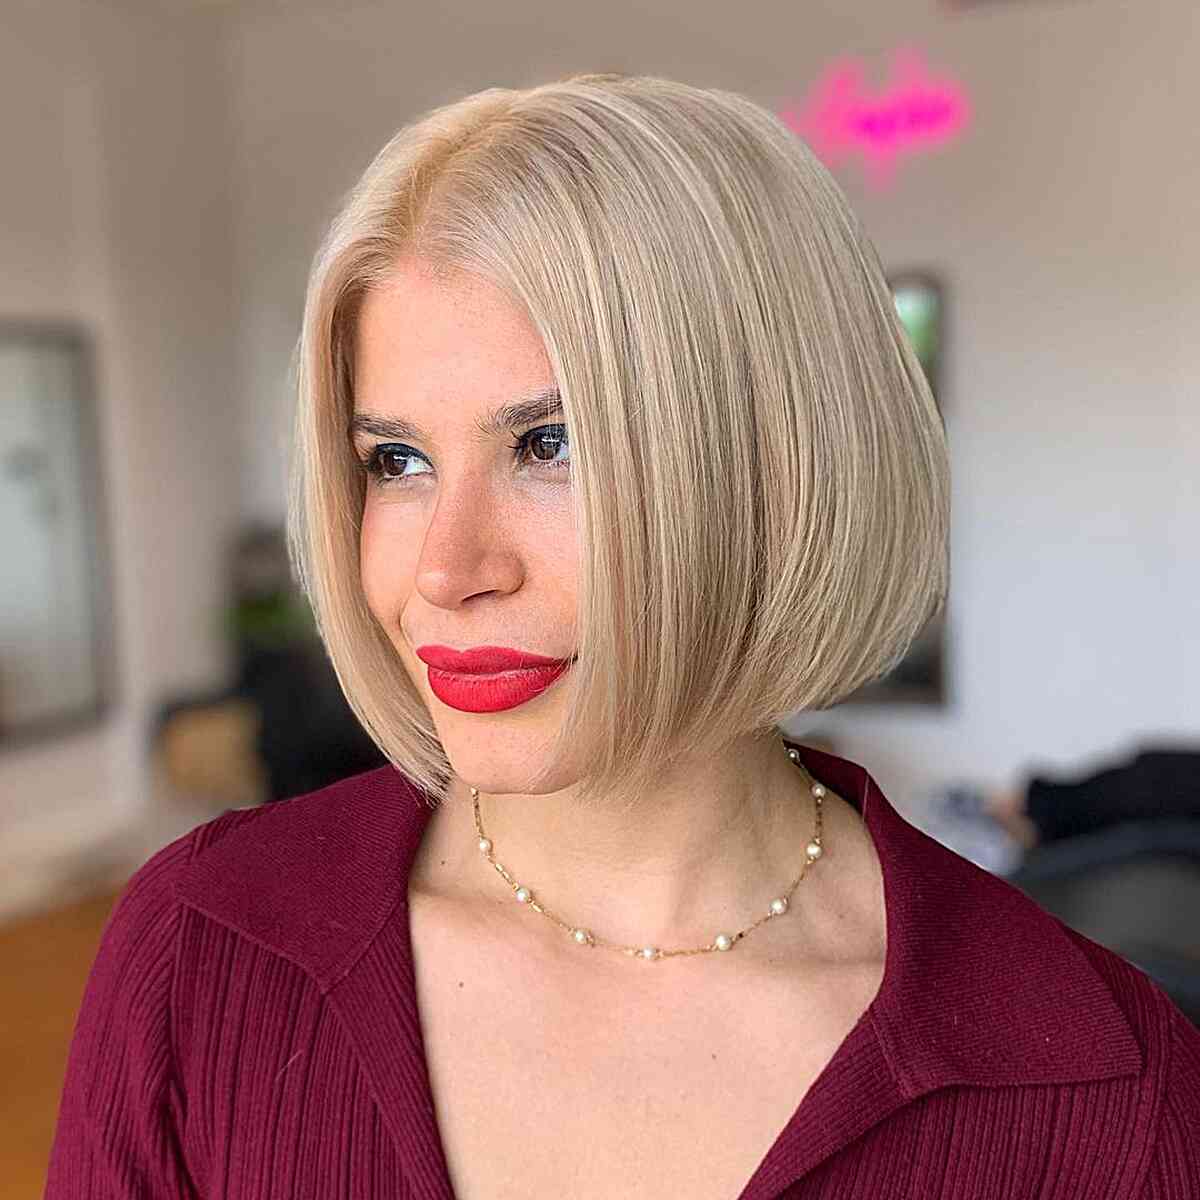 Vanilla Cream Short Slob Blonde Haircut for women in their 30s